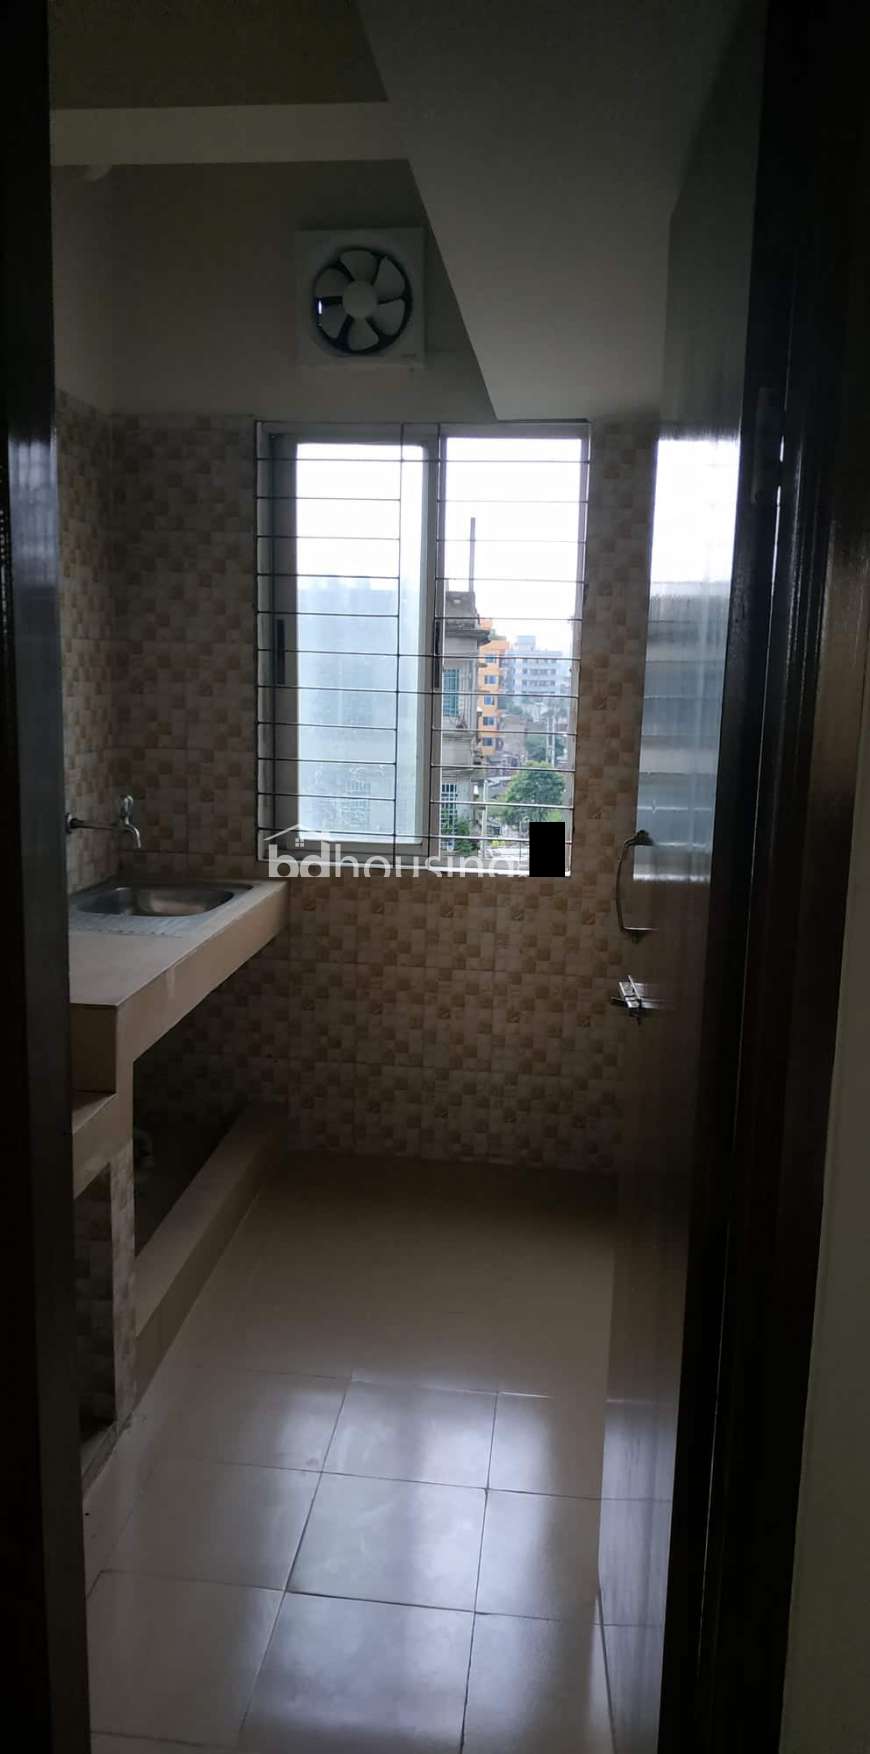 Urgent sale : 1150 sqft ready apartment in Baitul Aman Housing society, Apartment/Flats at Adabor